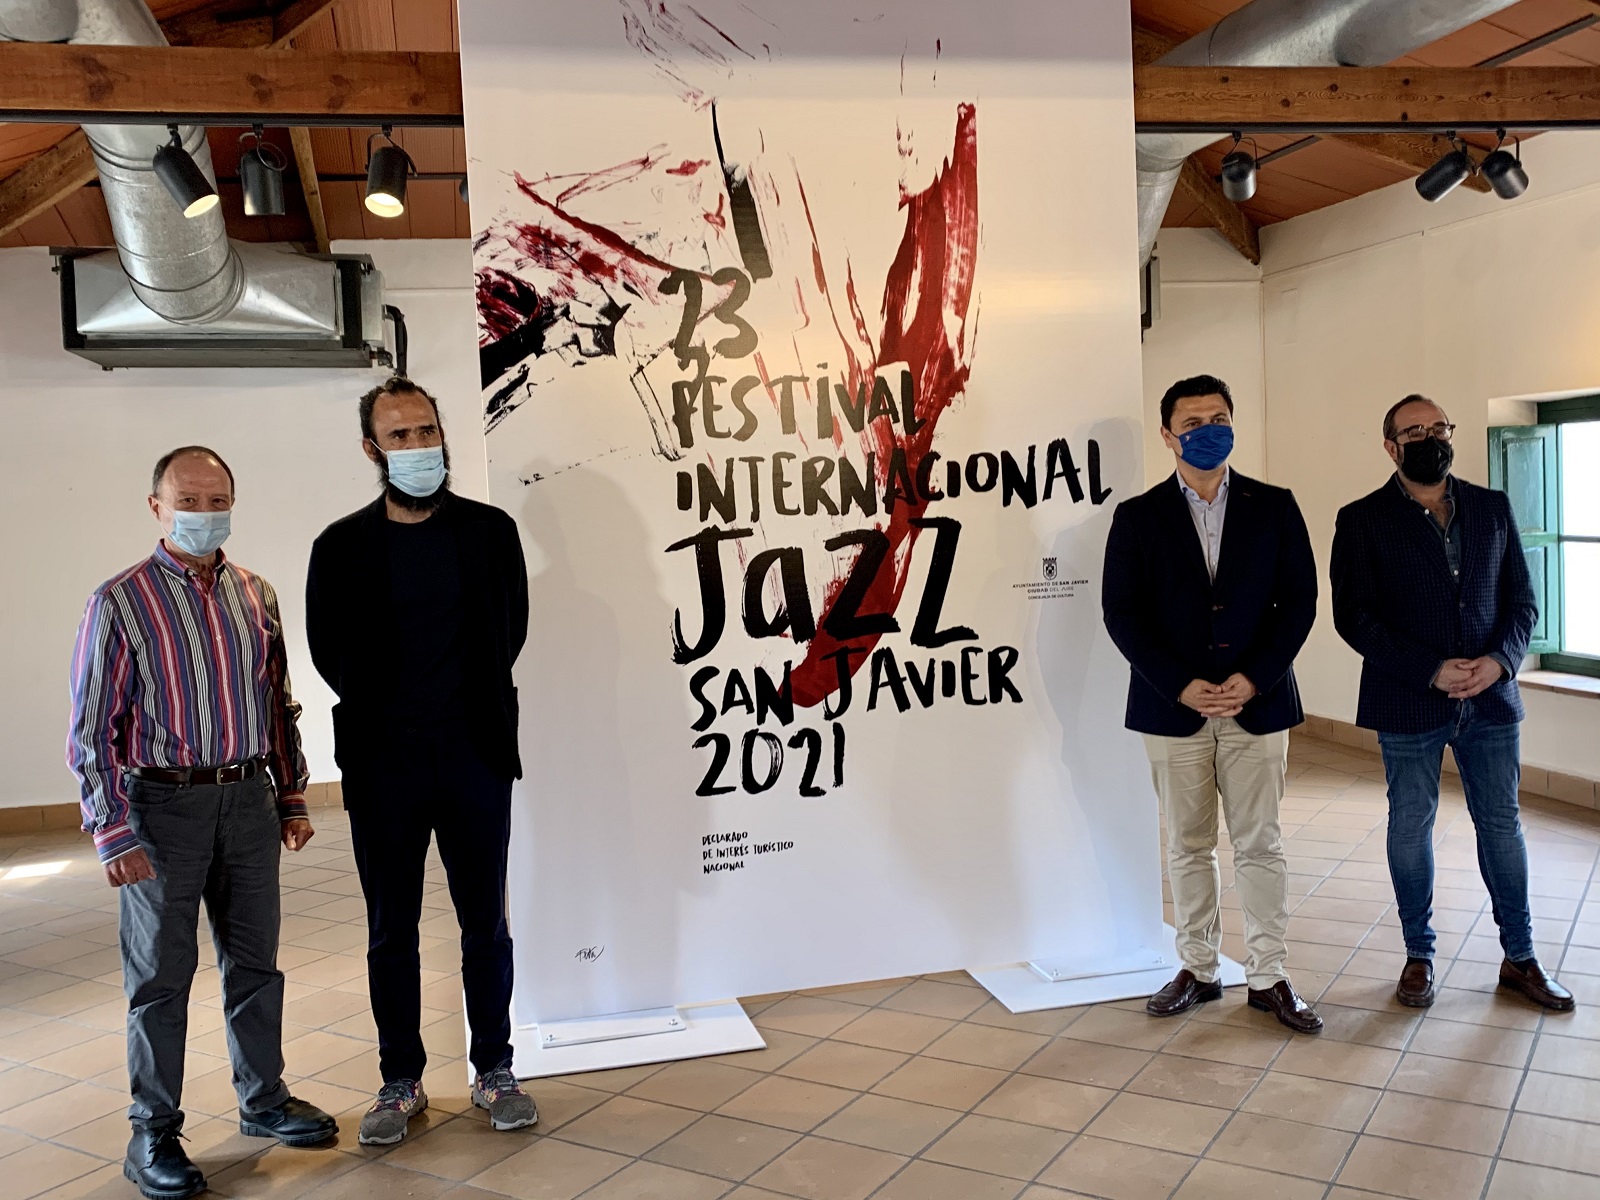 Presentation of the 2021 San Javier International Jazz Festival poster